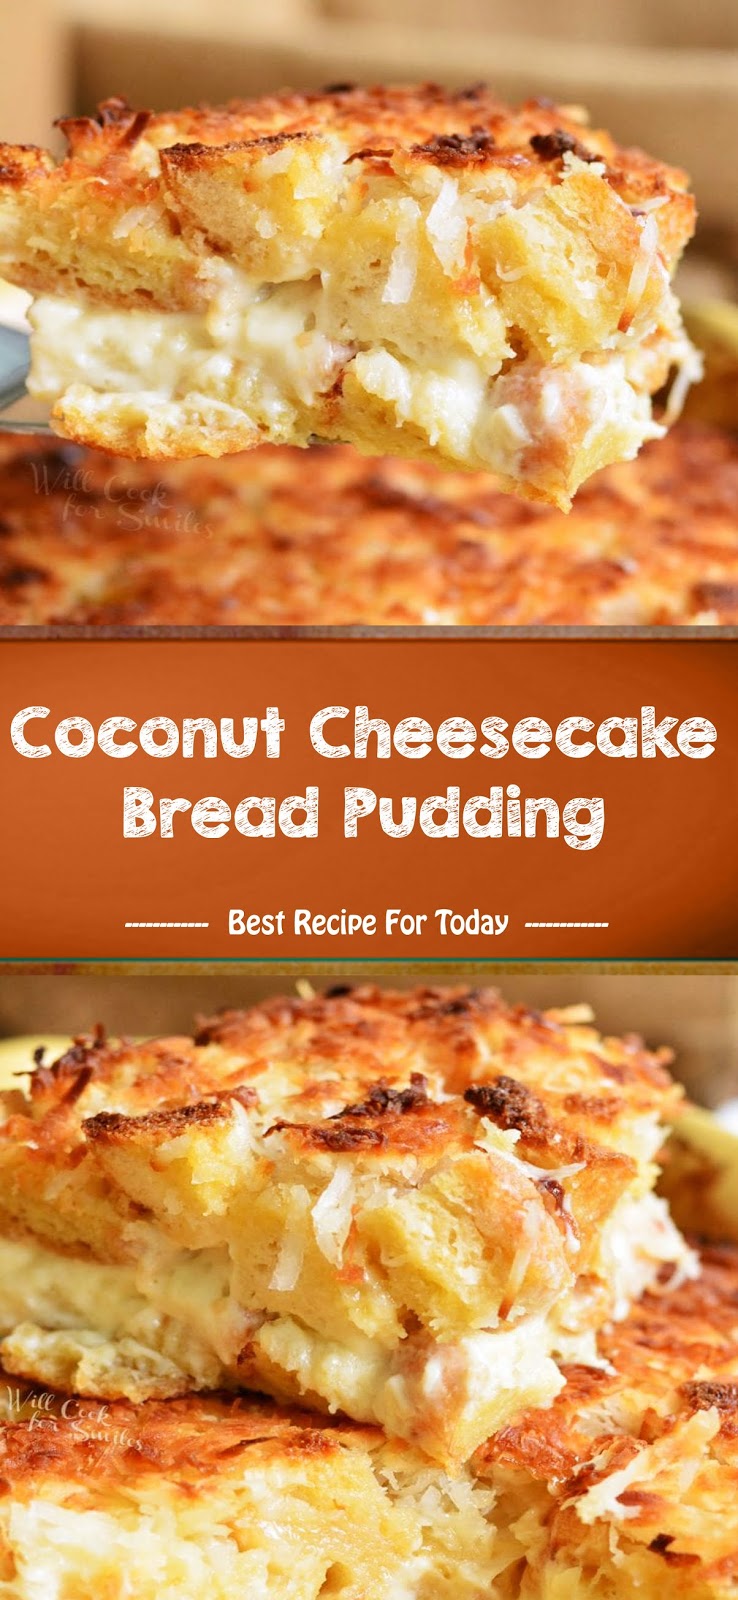 Coconut Cheesecake Bread Pudding | Healthyrecipes-04